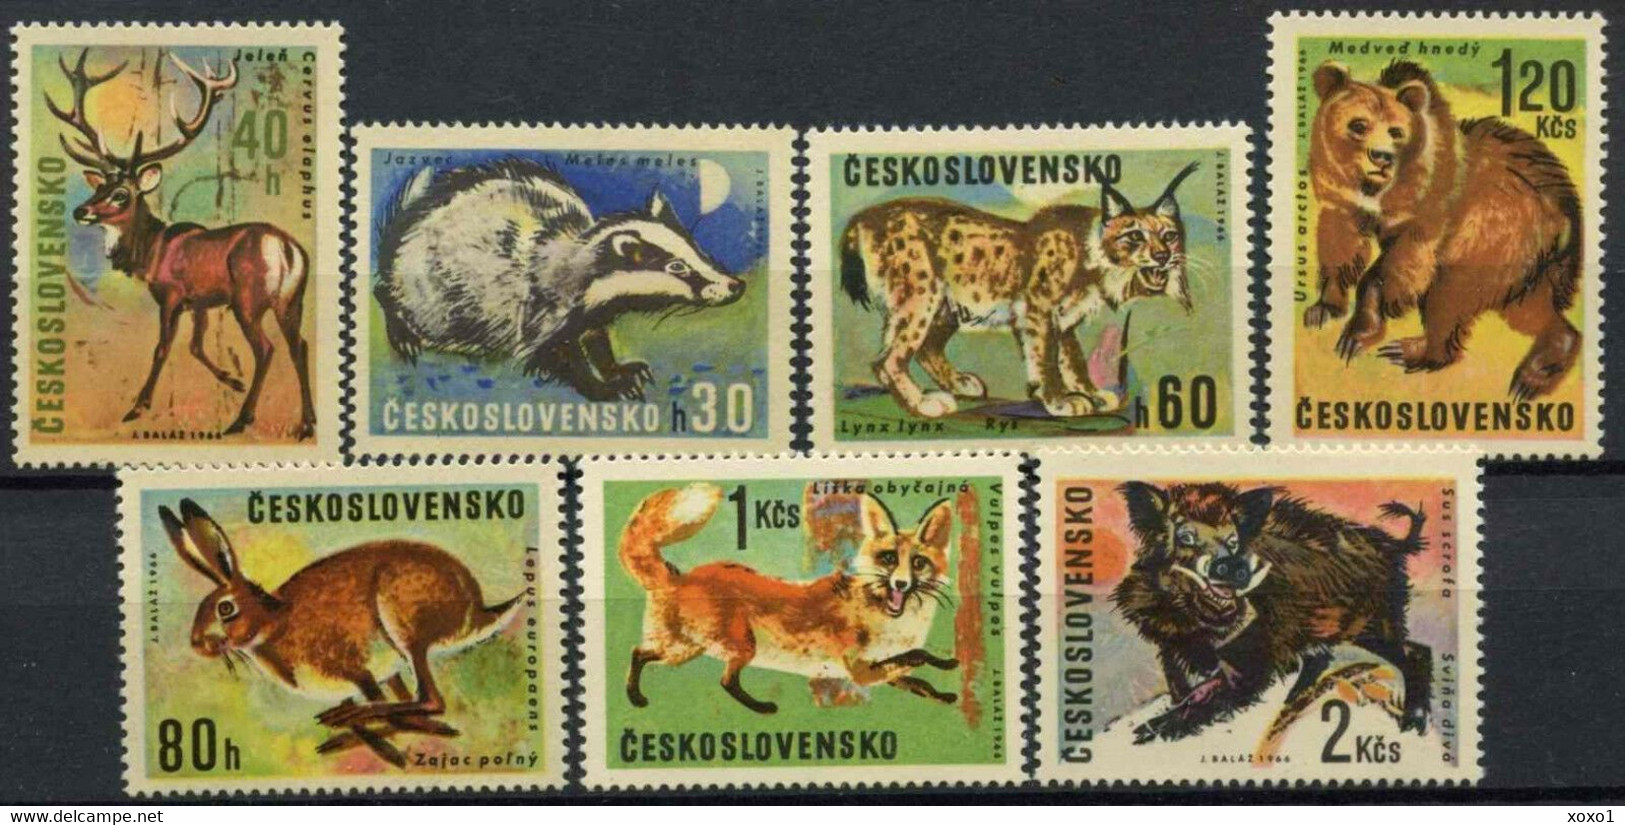 Czechoslovakia 1966 MiNr. 1661 - 1667  Tschechoslowakei  Animals 7v    MNH ** 9,00 € - Bären